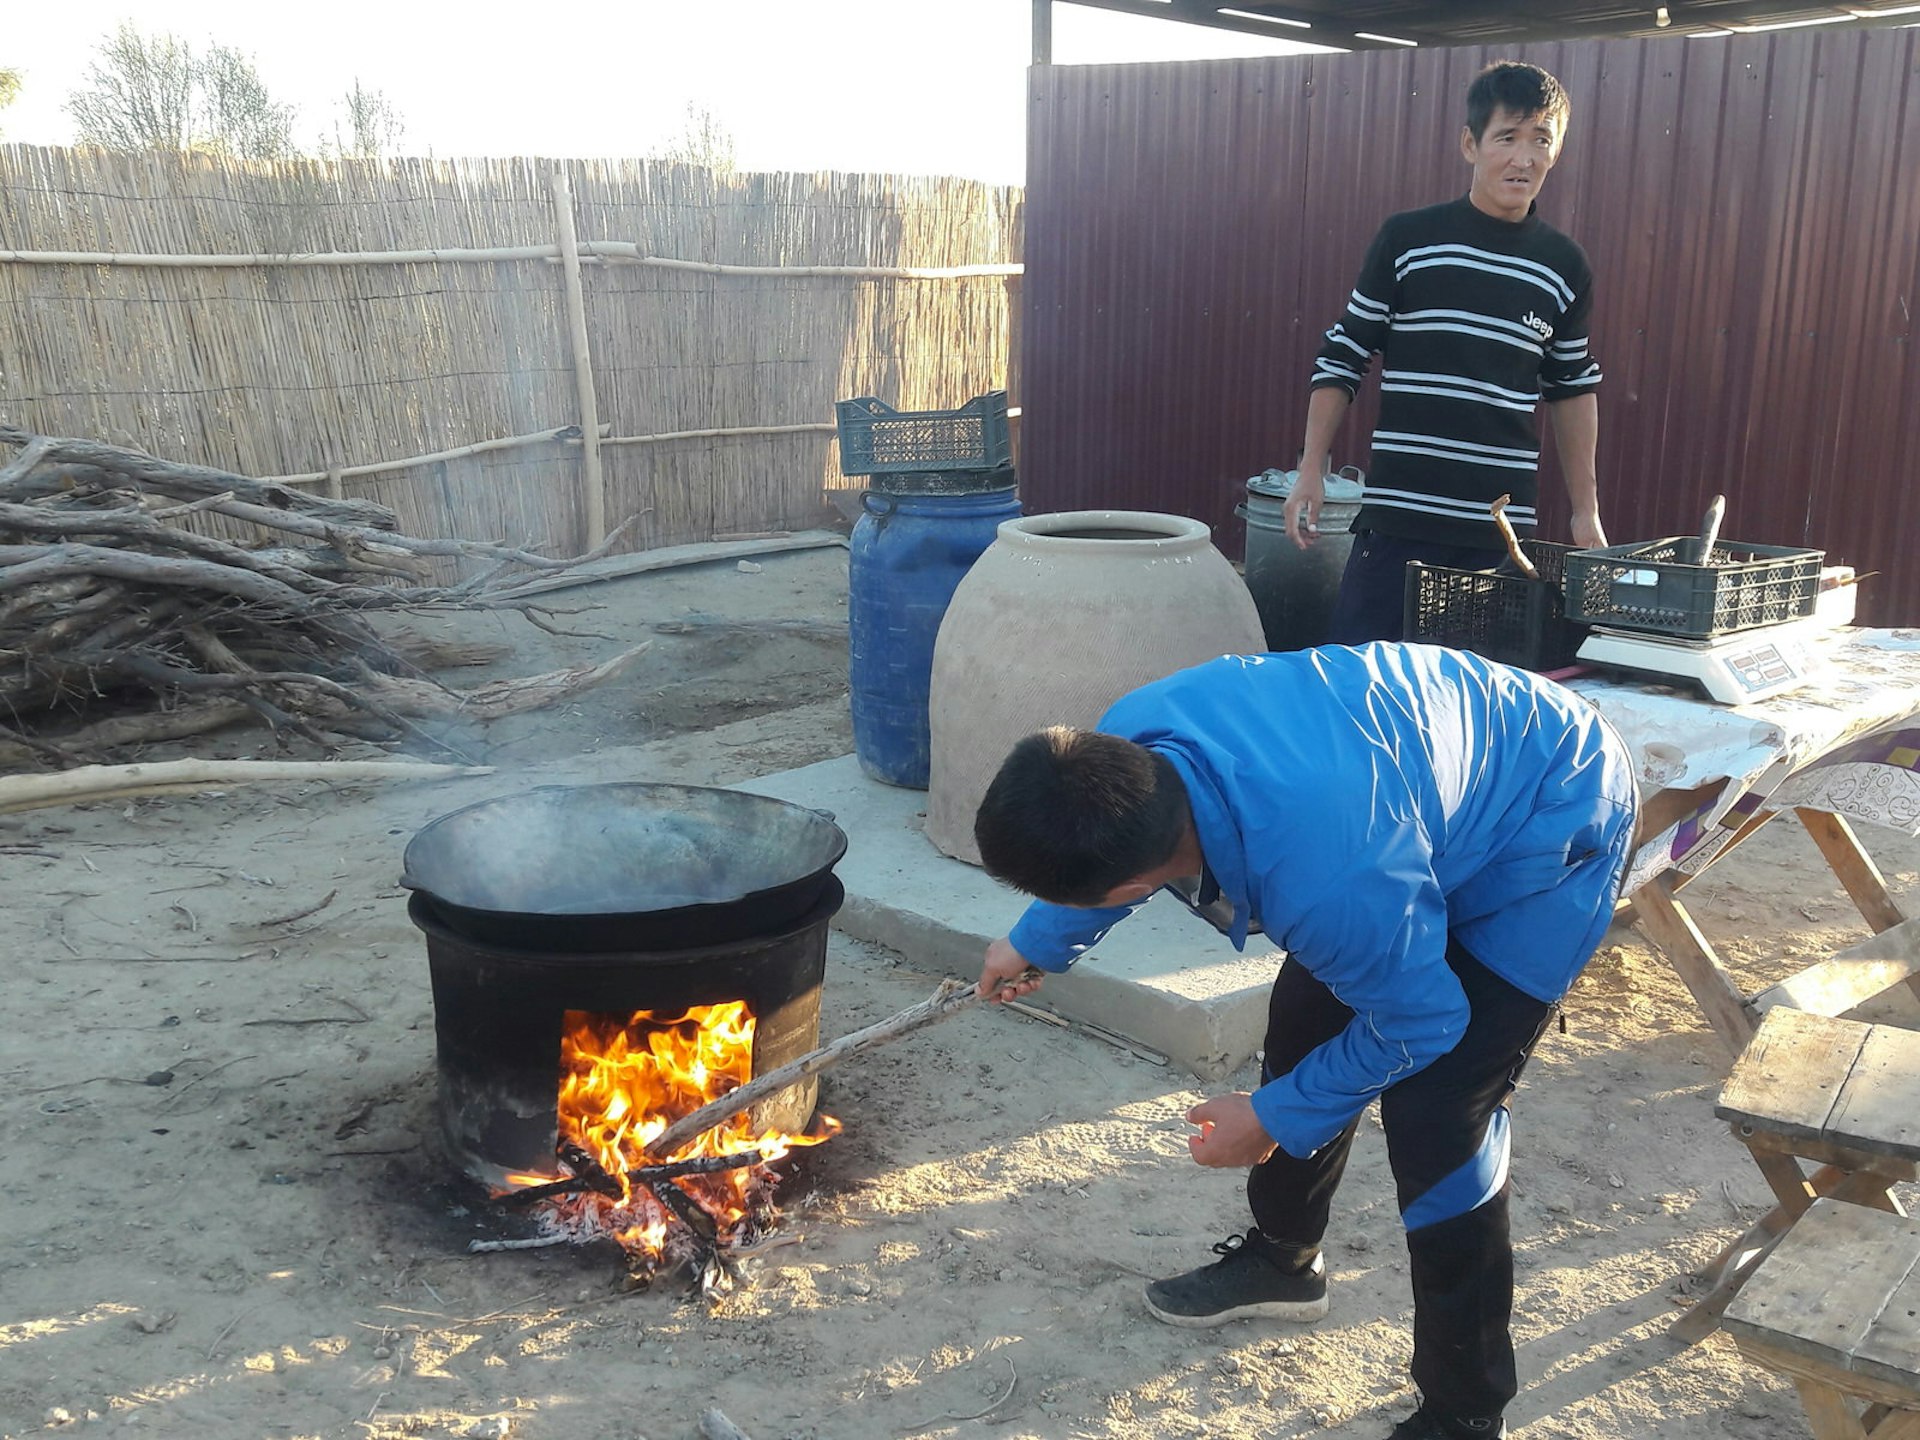 One man putting a stick into a fire under a large pot